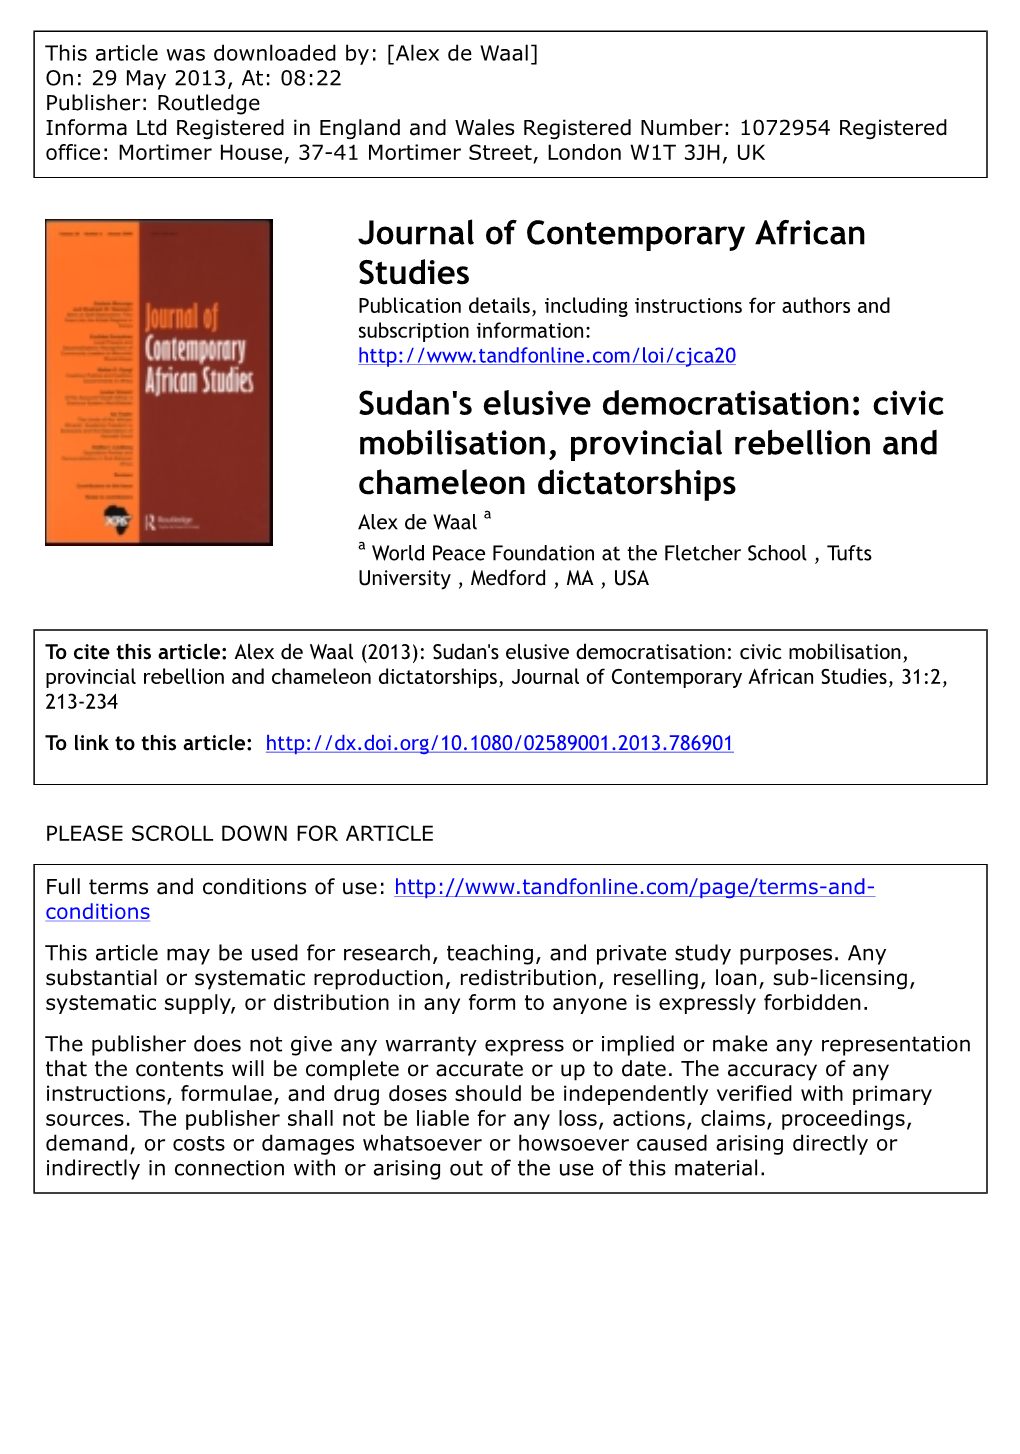 Sudan's Elusive Democratization' in 2013